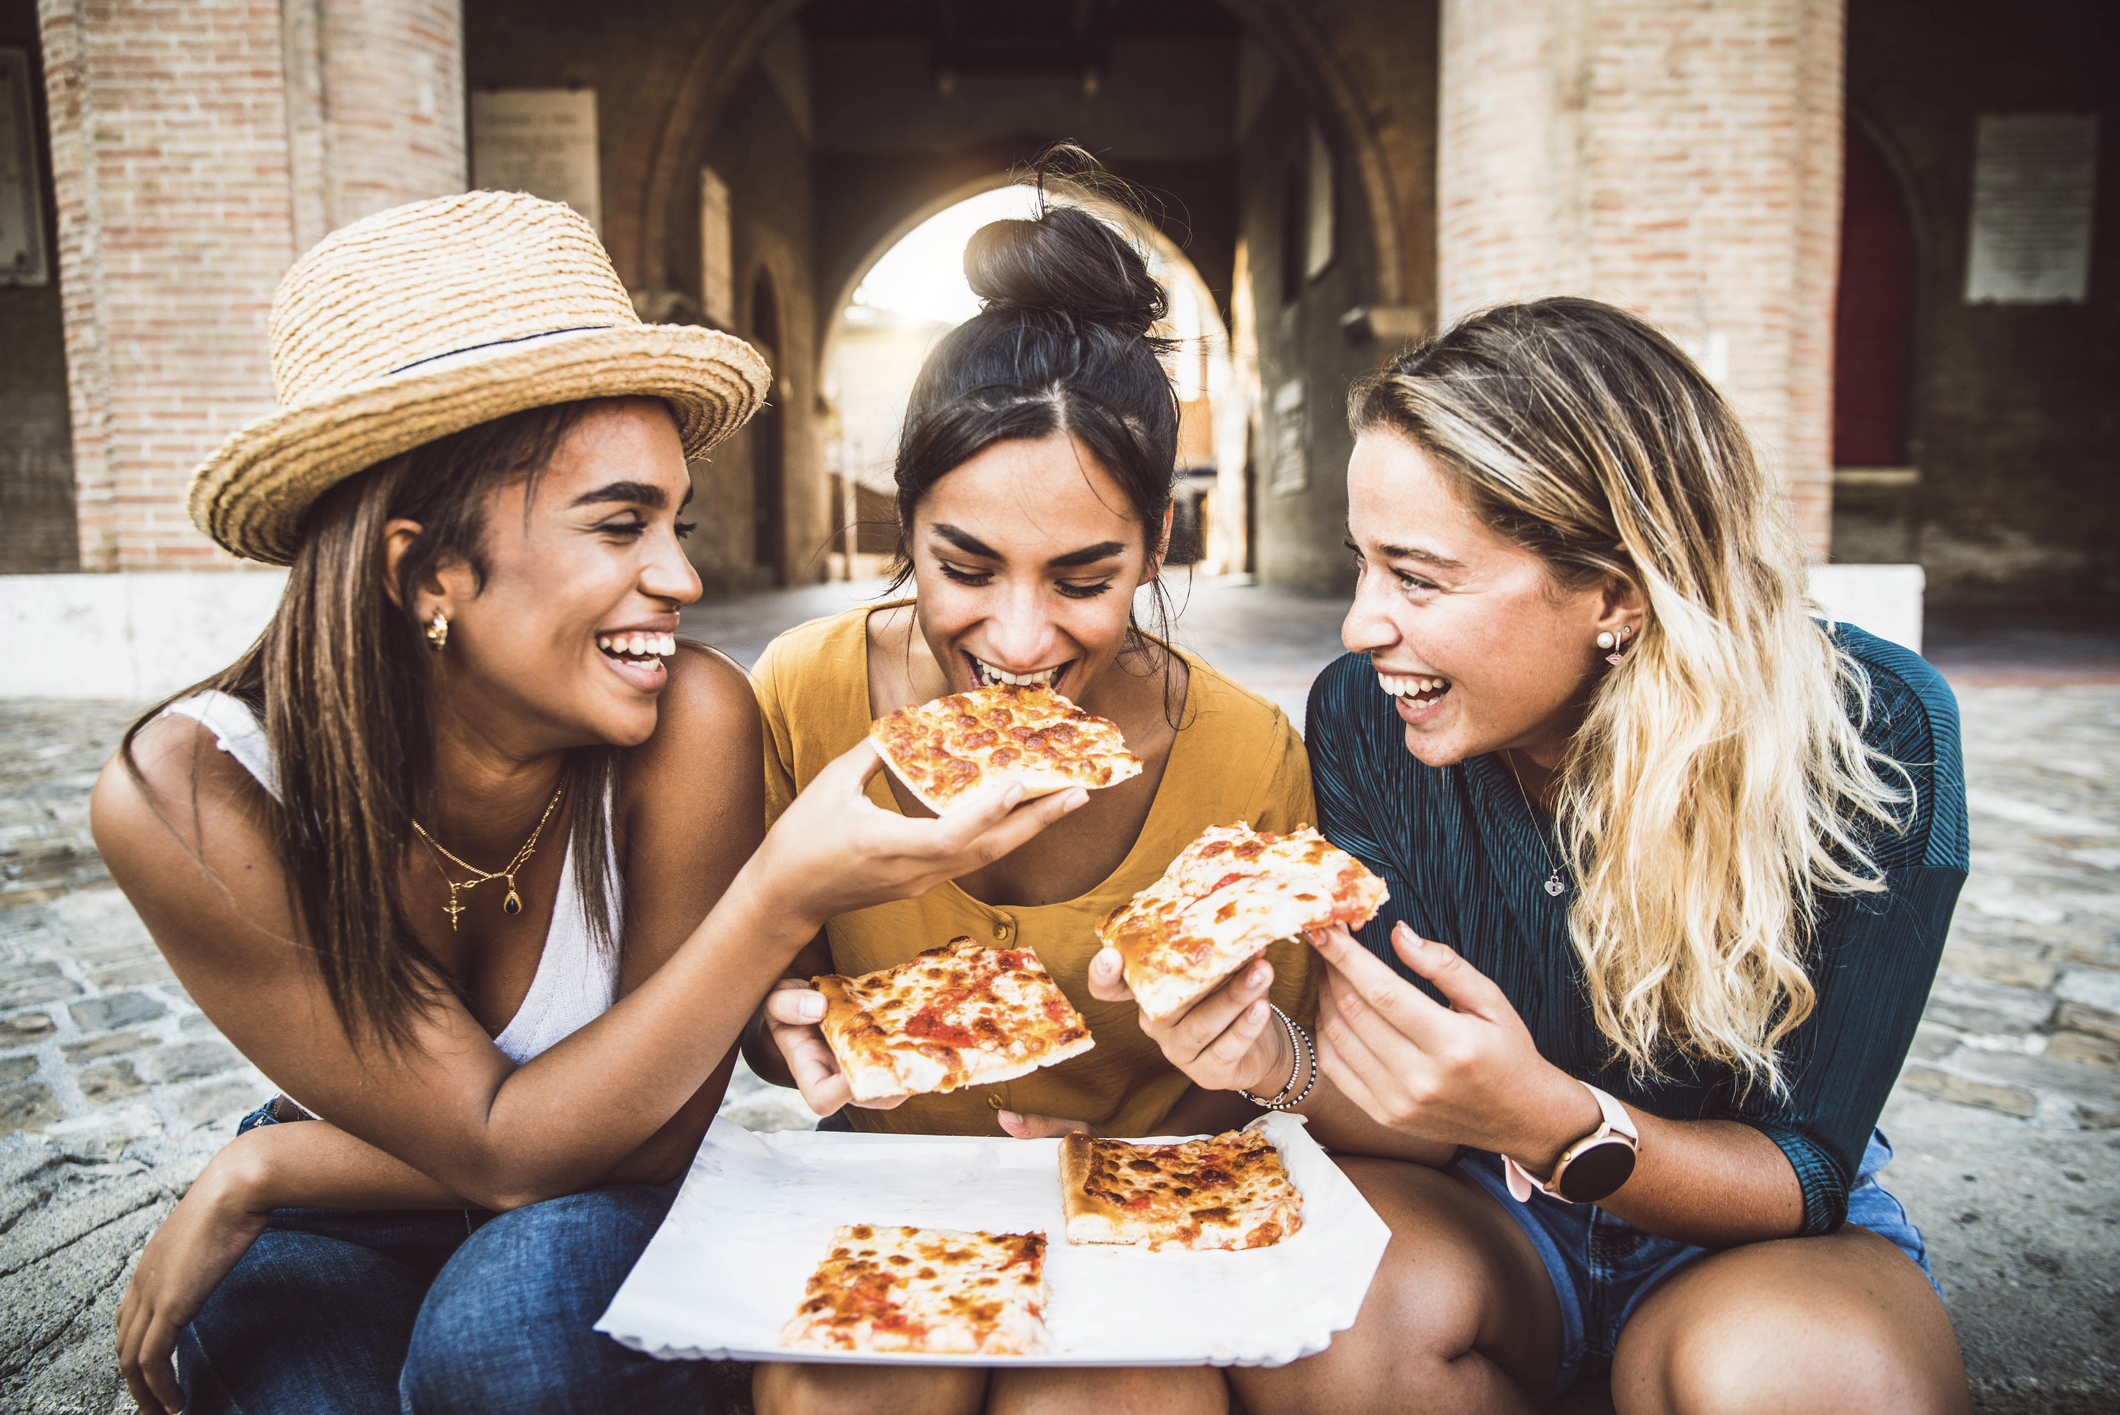 Three young women enjoy pizza on a city street.